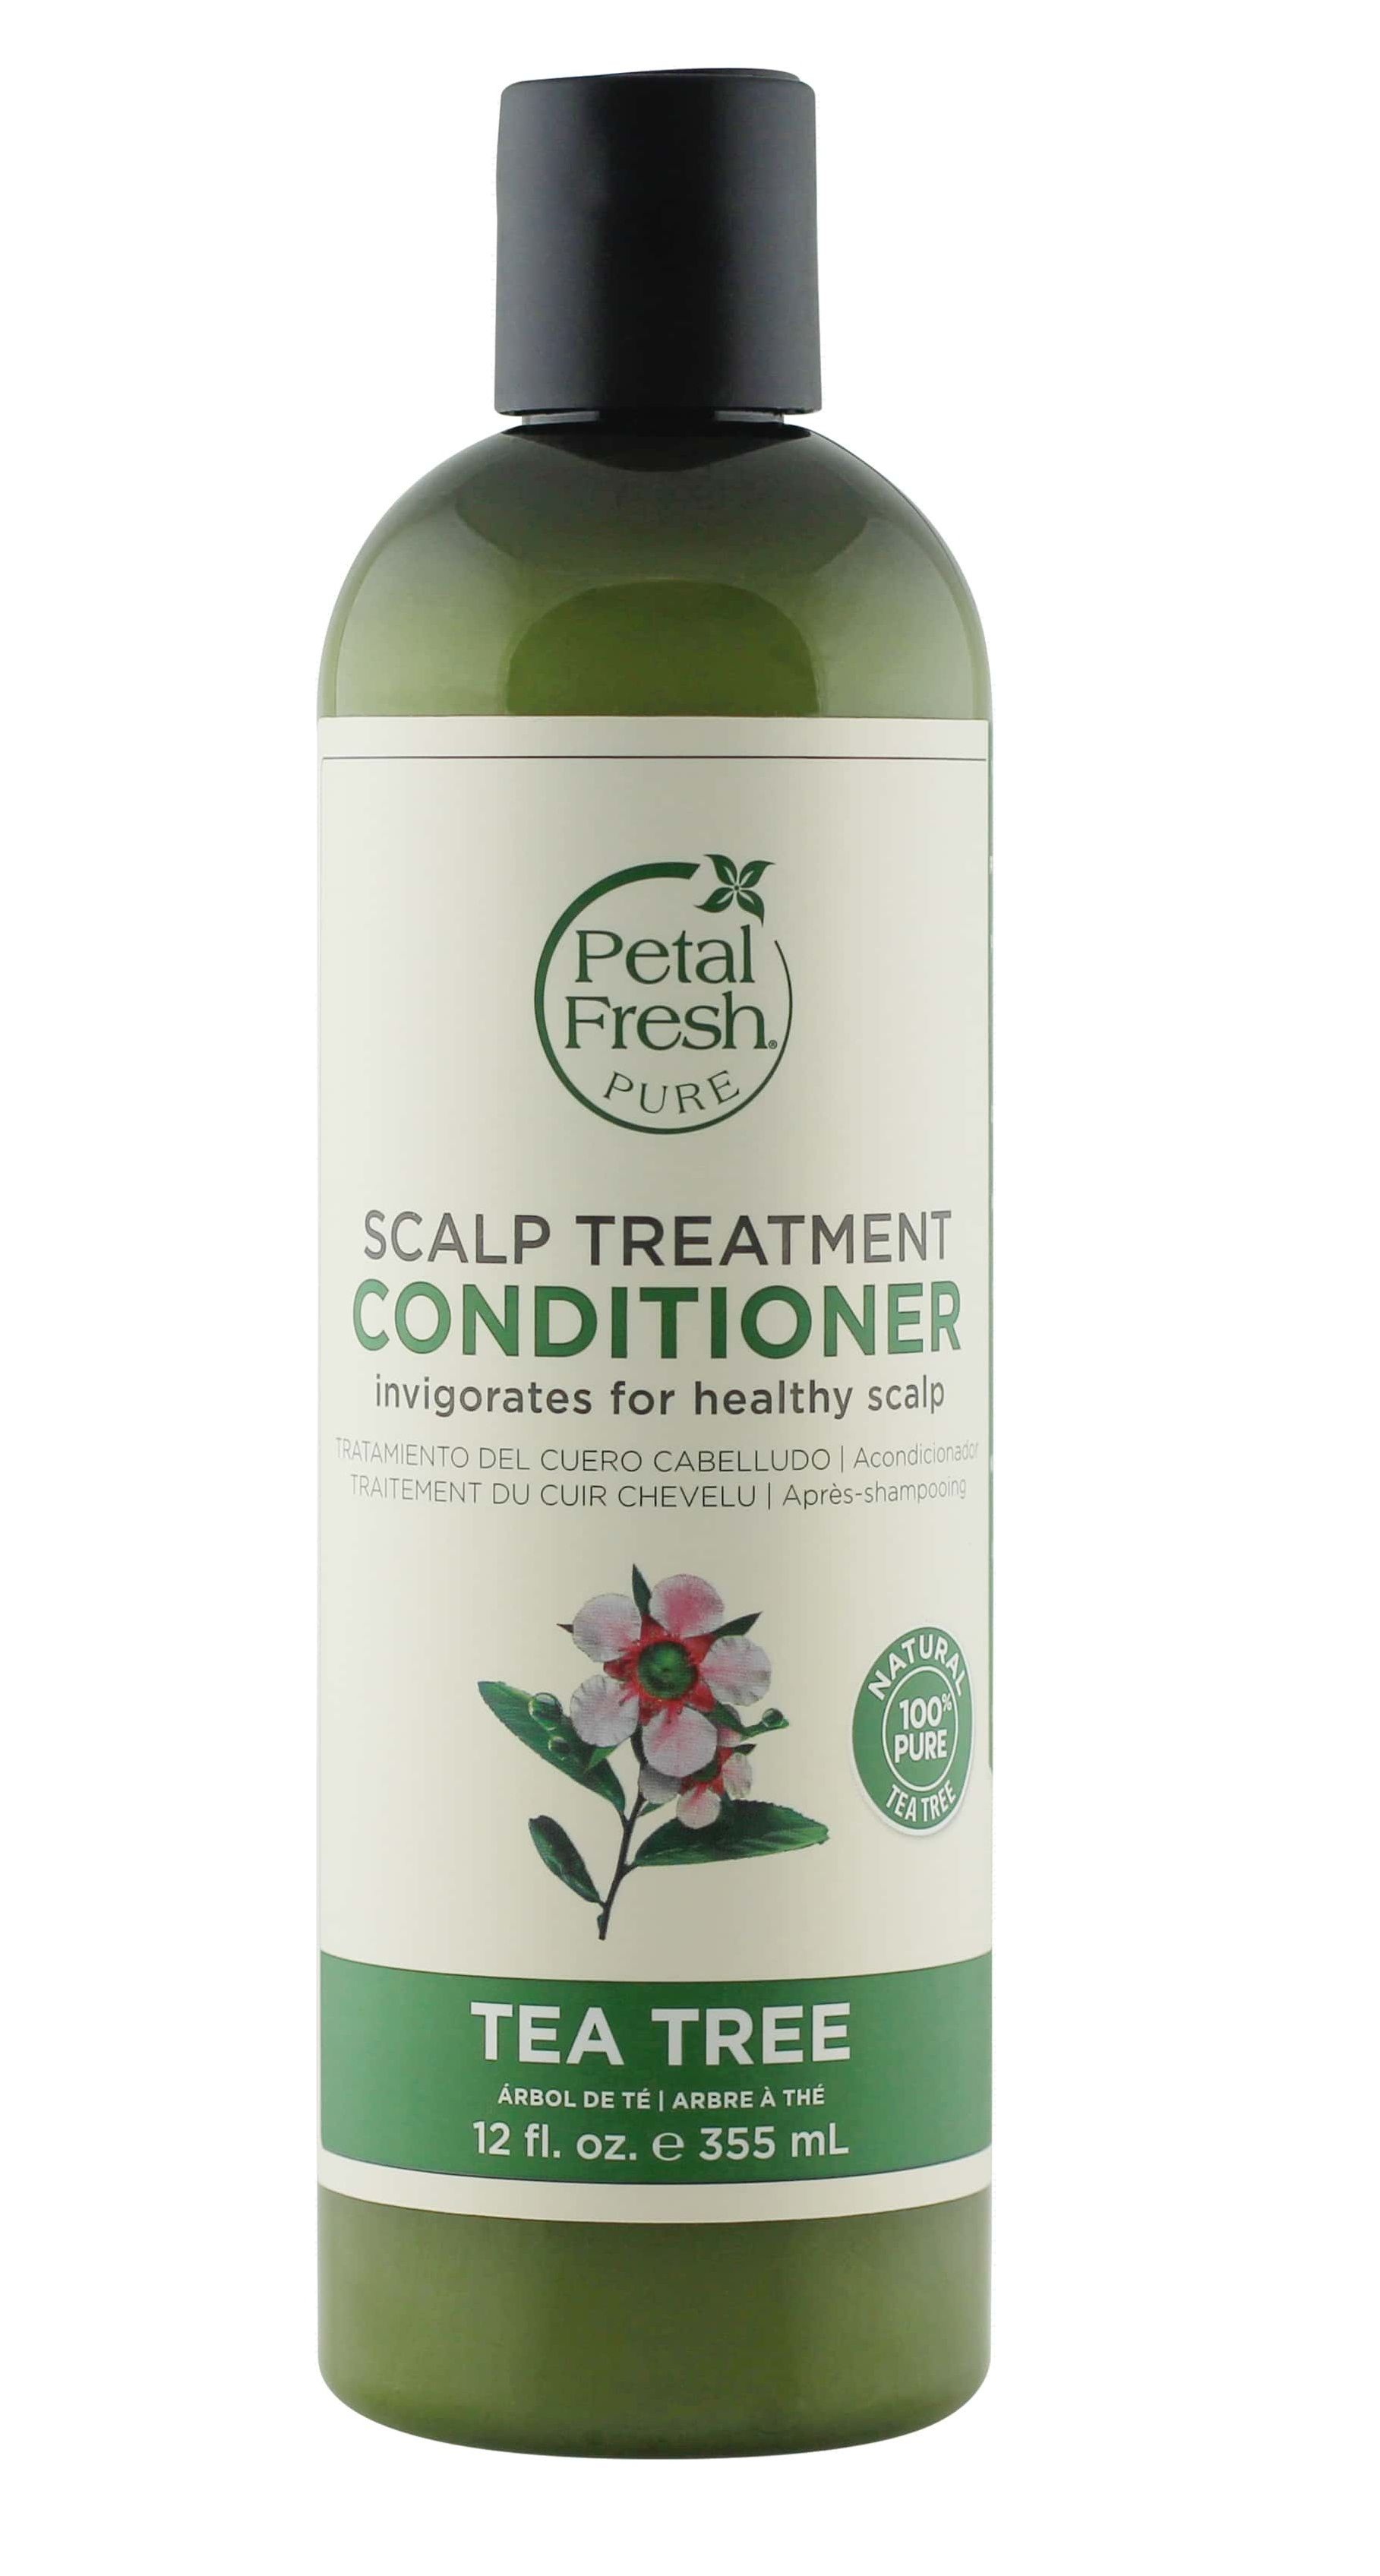 Petal Fresh Pure Tea Tree Scalp Treatment Conditioner